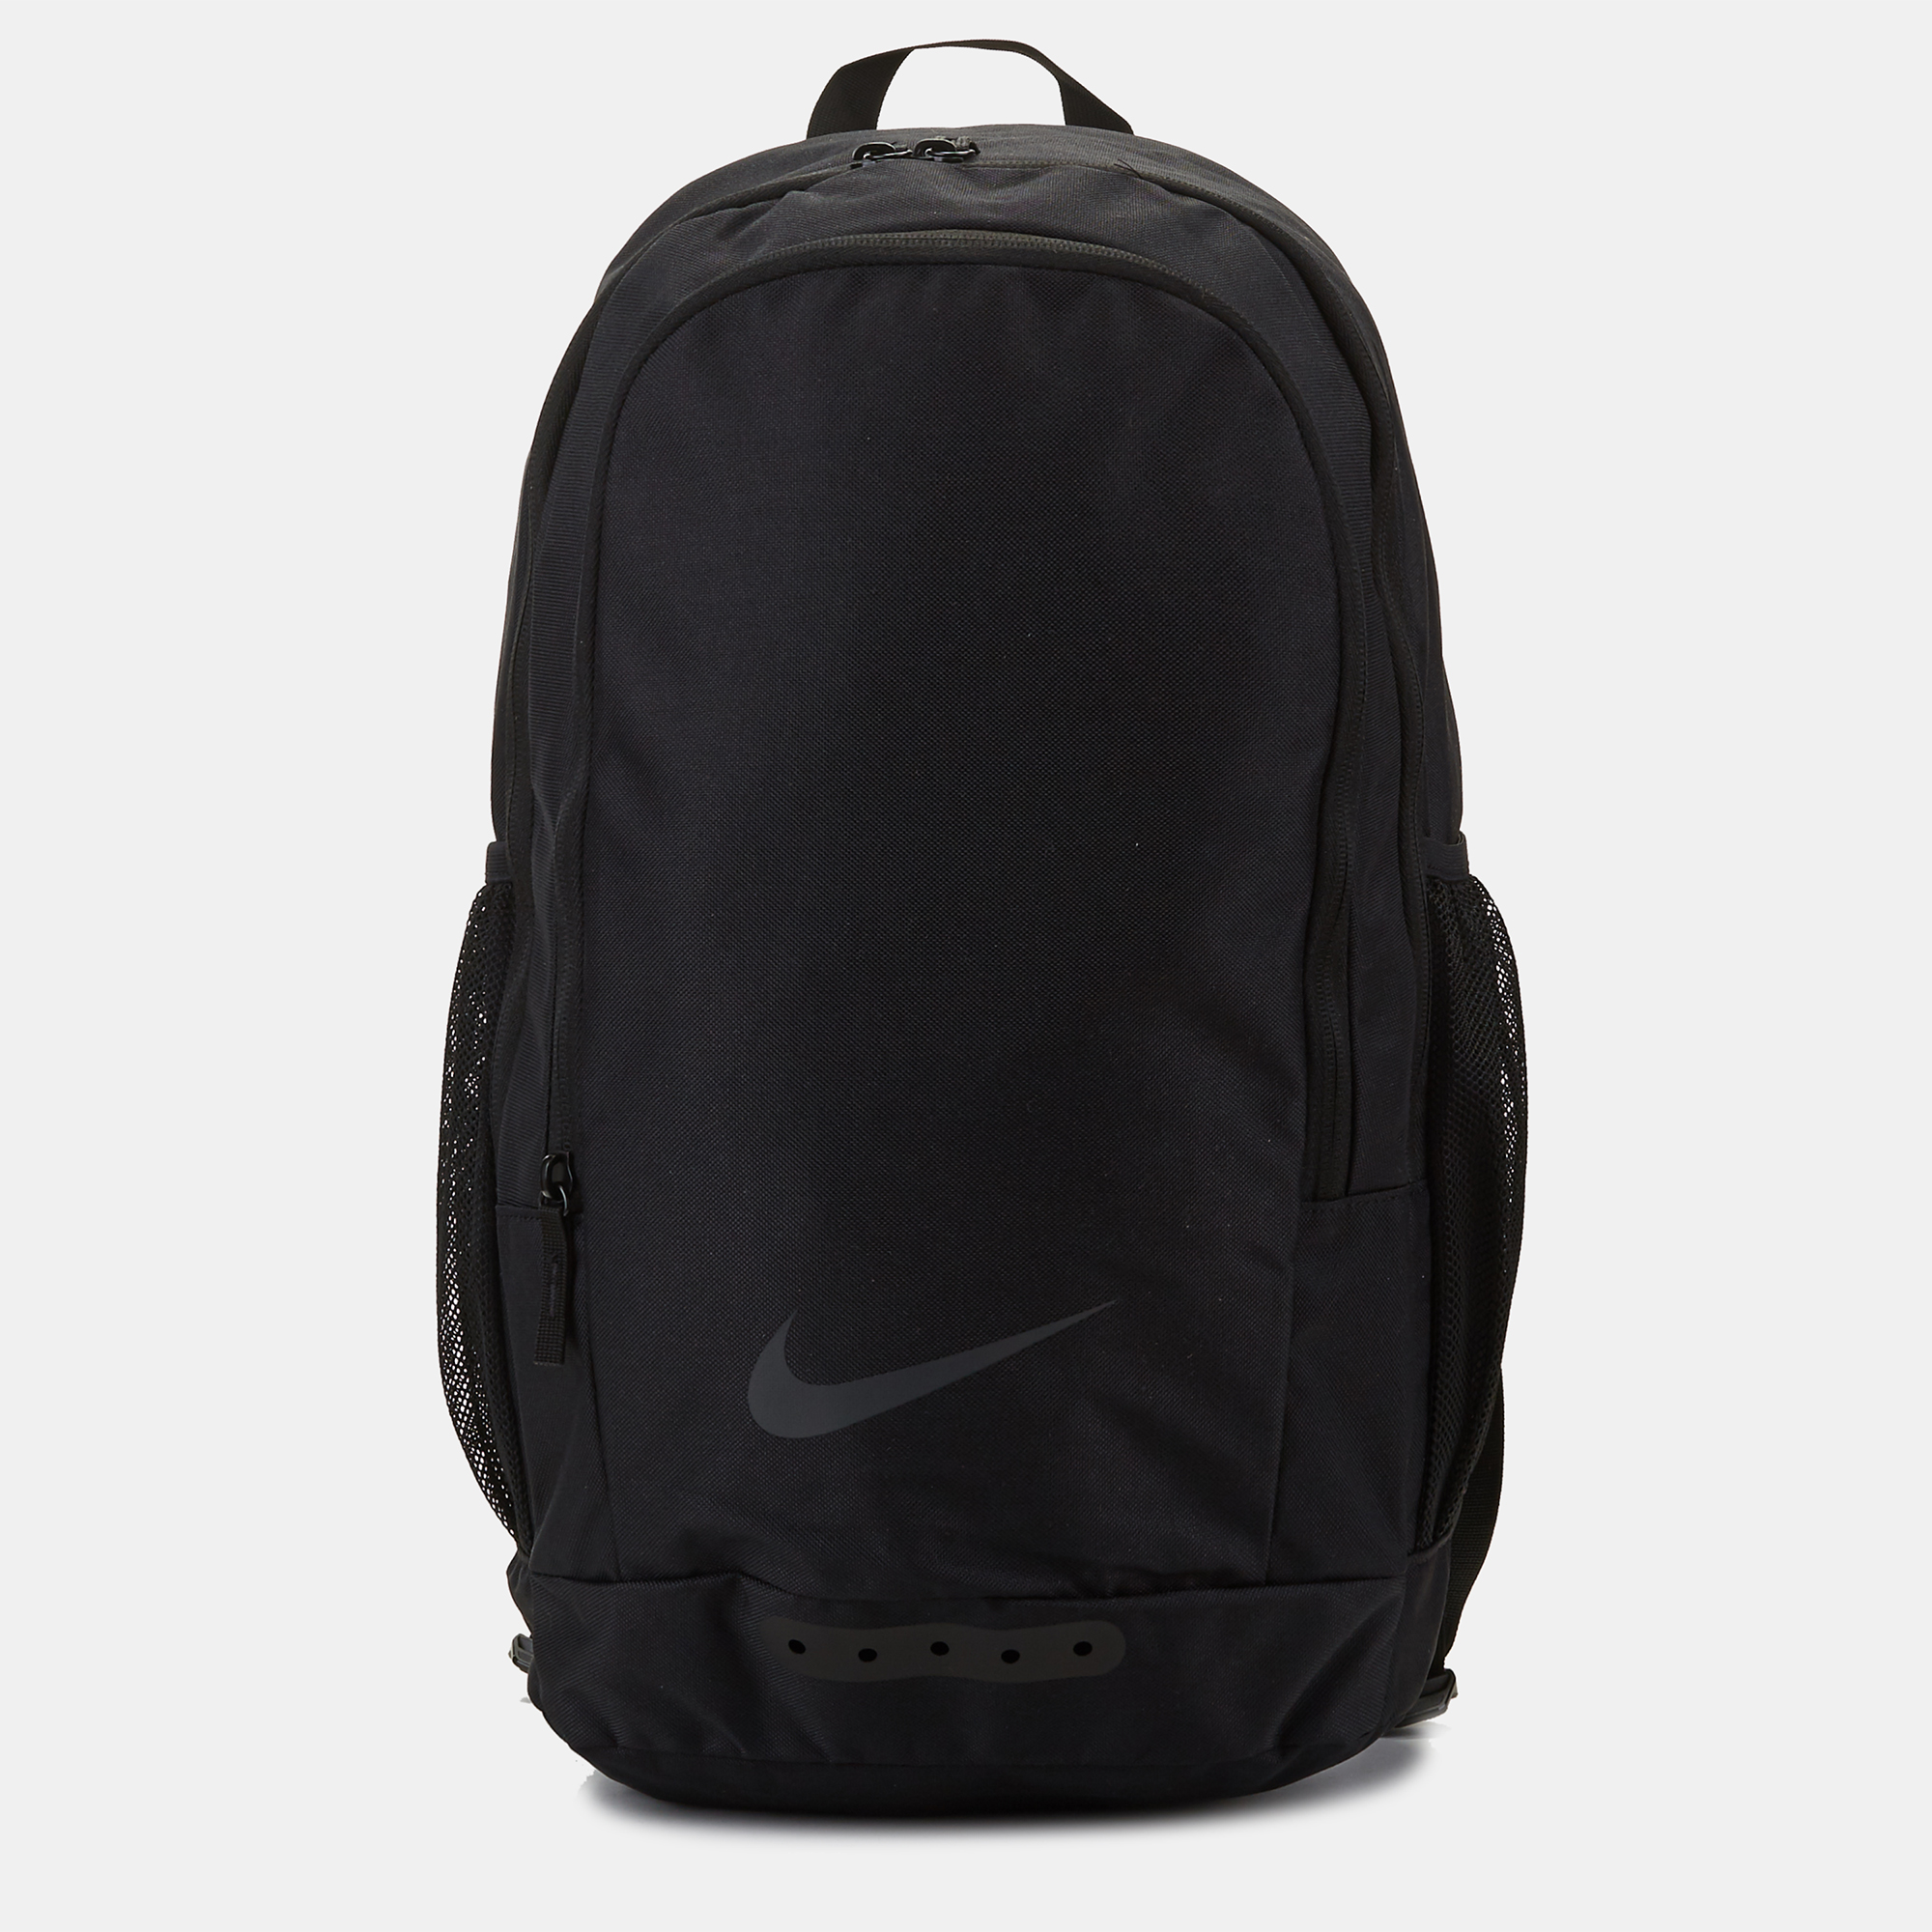 Nike Academy Football Backpack | Backpacks and Rucksacks | Bags ...